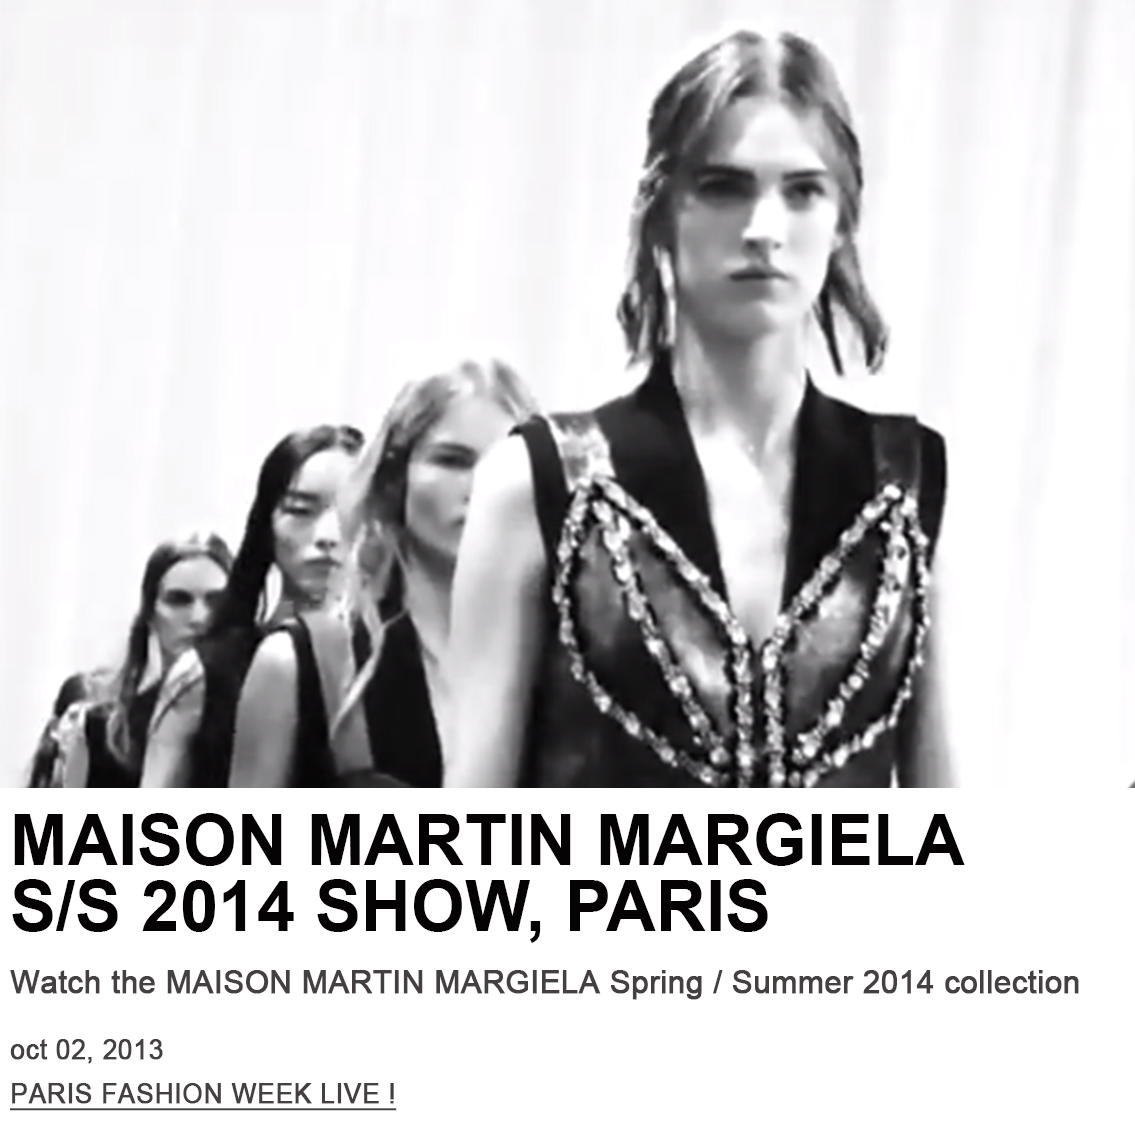 (video) MAISON MARTIN MARGIELA / SPRING SUMMER 2014